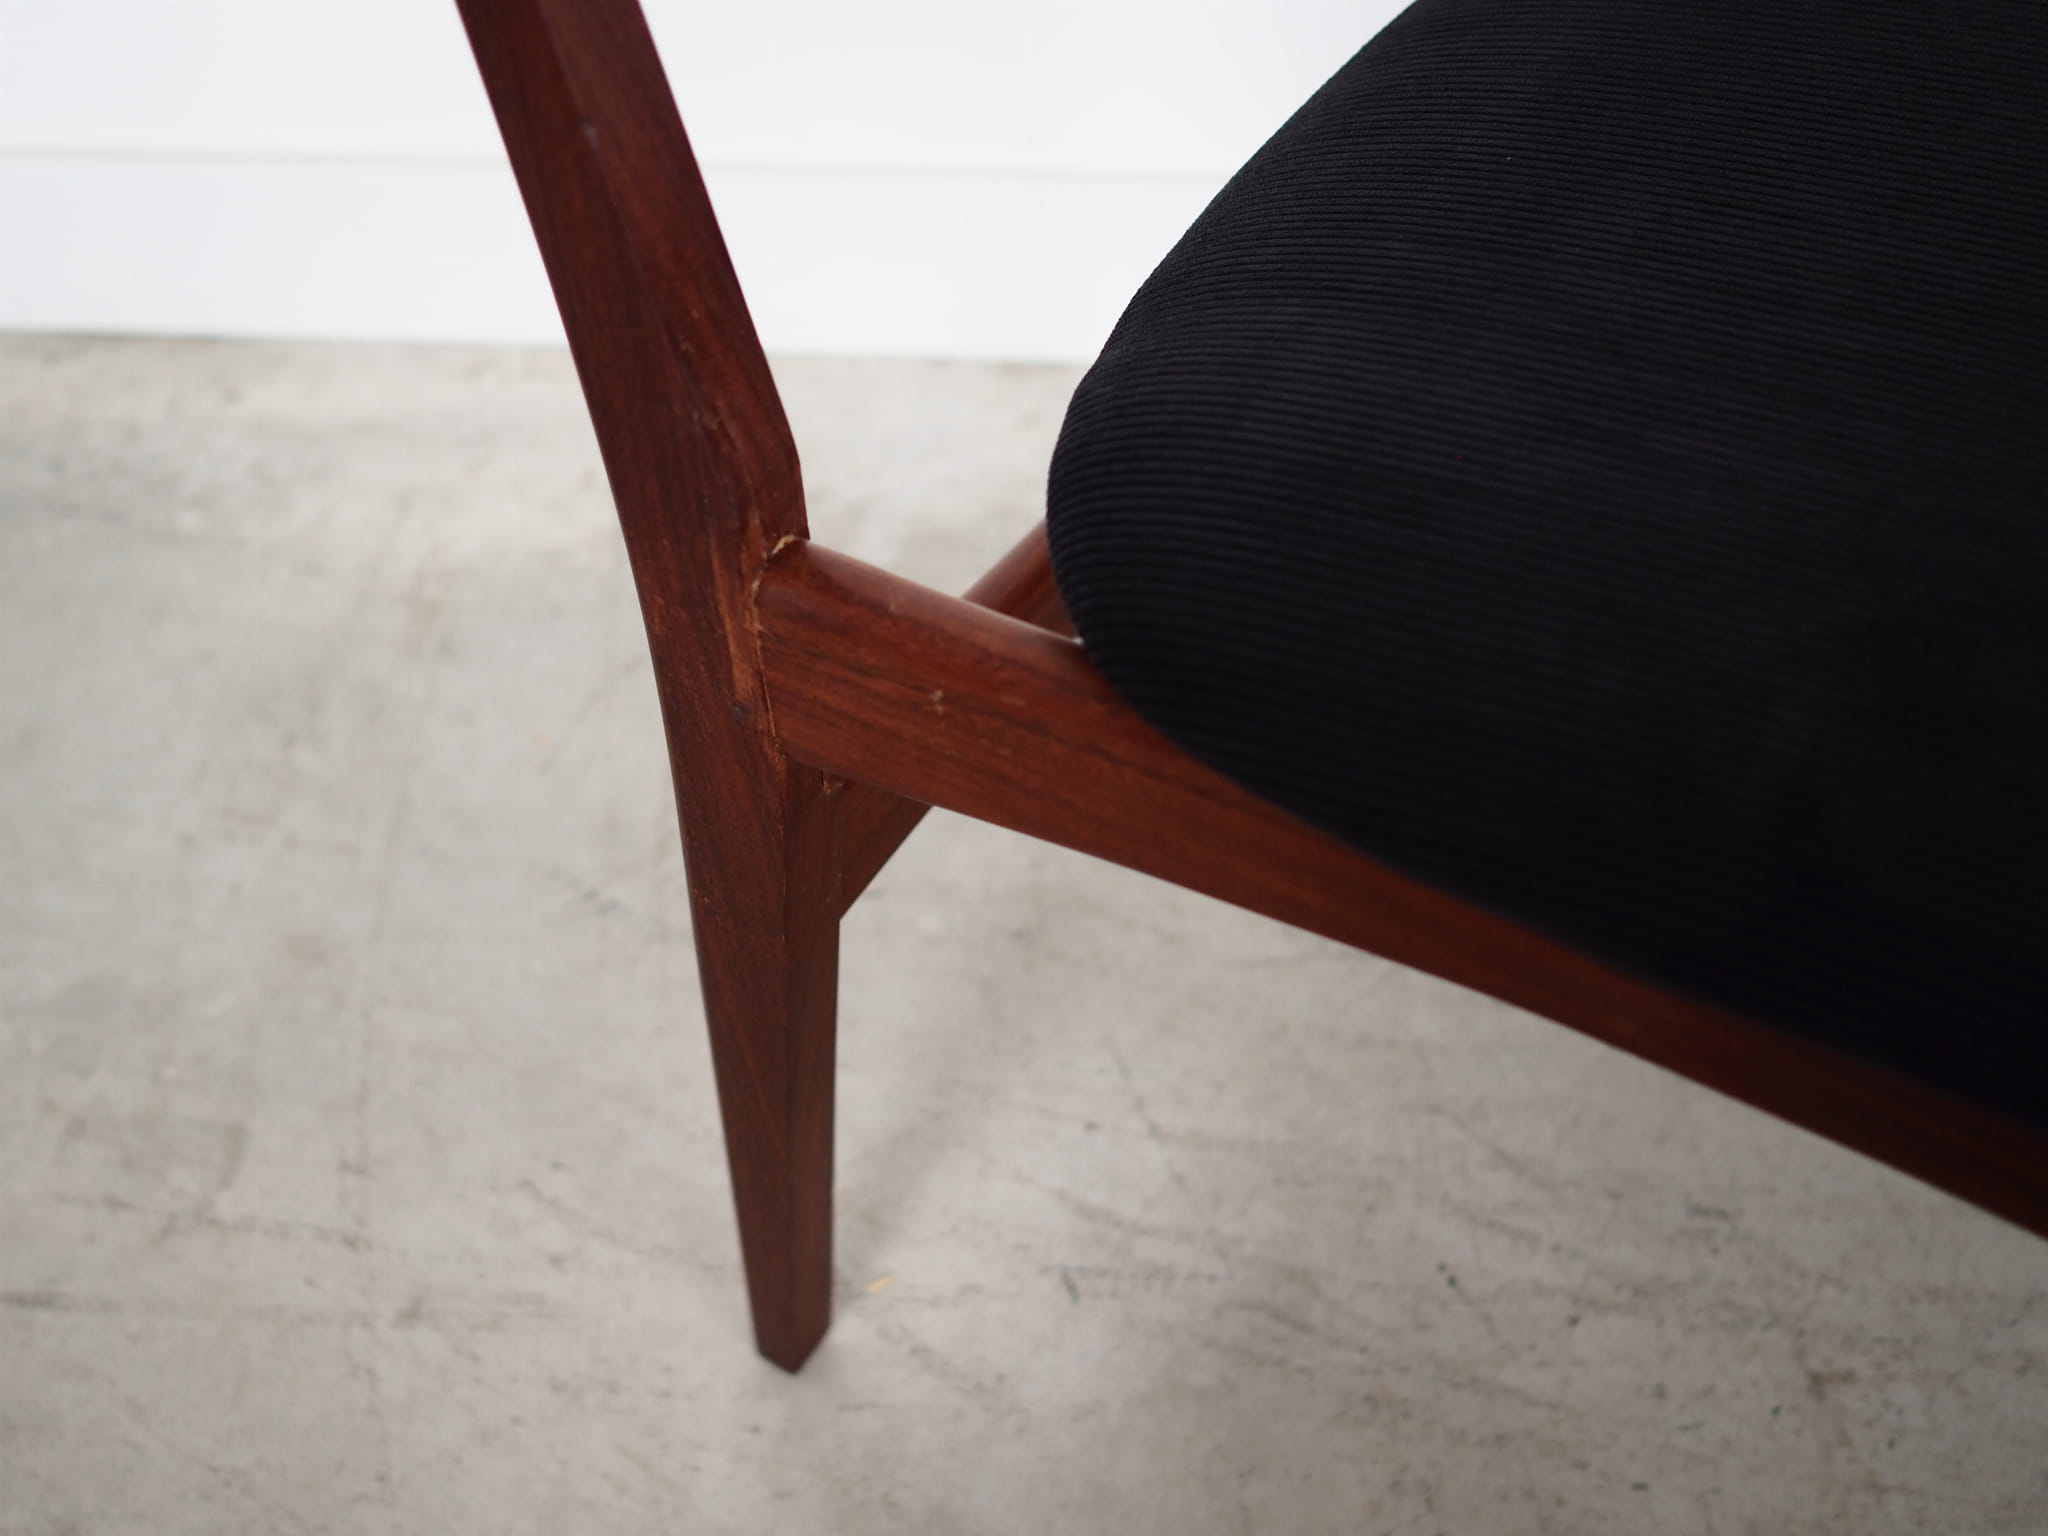 4x Vintage Stuhl Teakholz Textil Braun 1960er Jahre